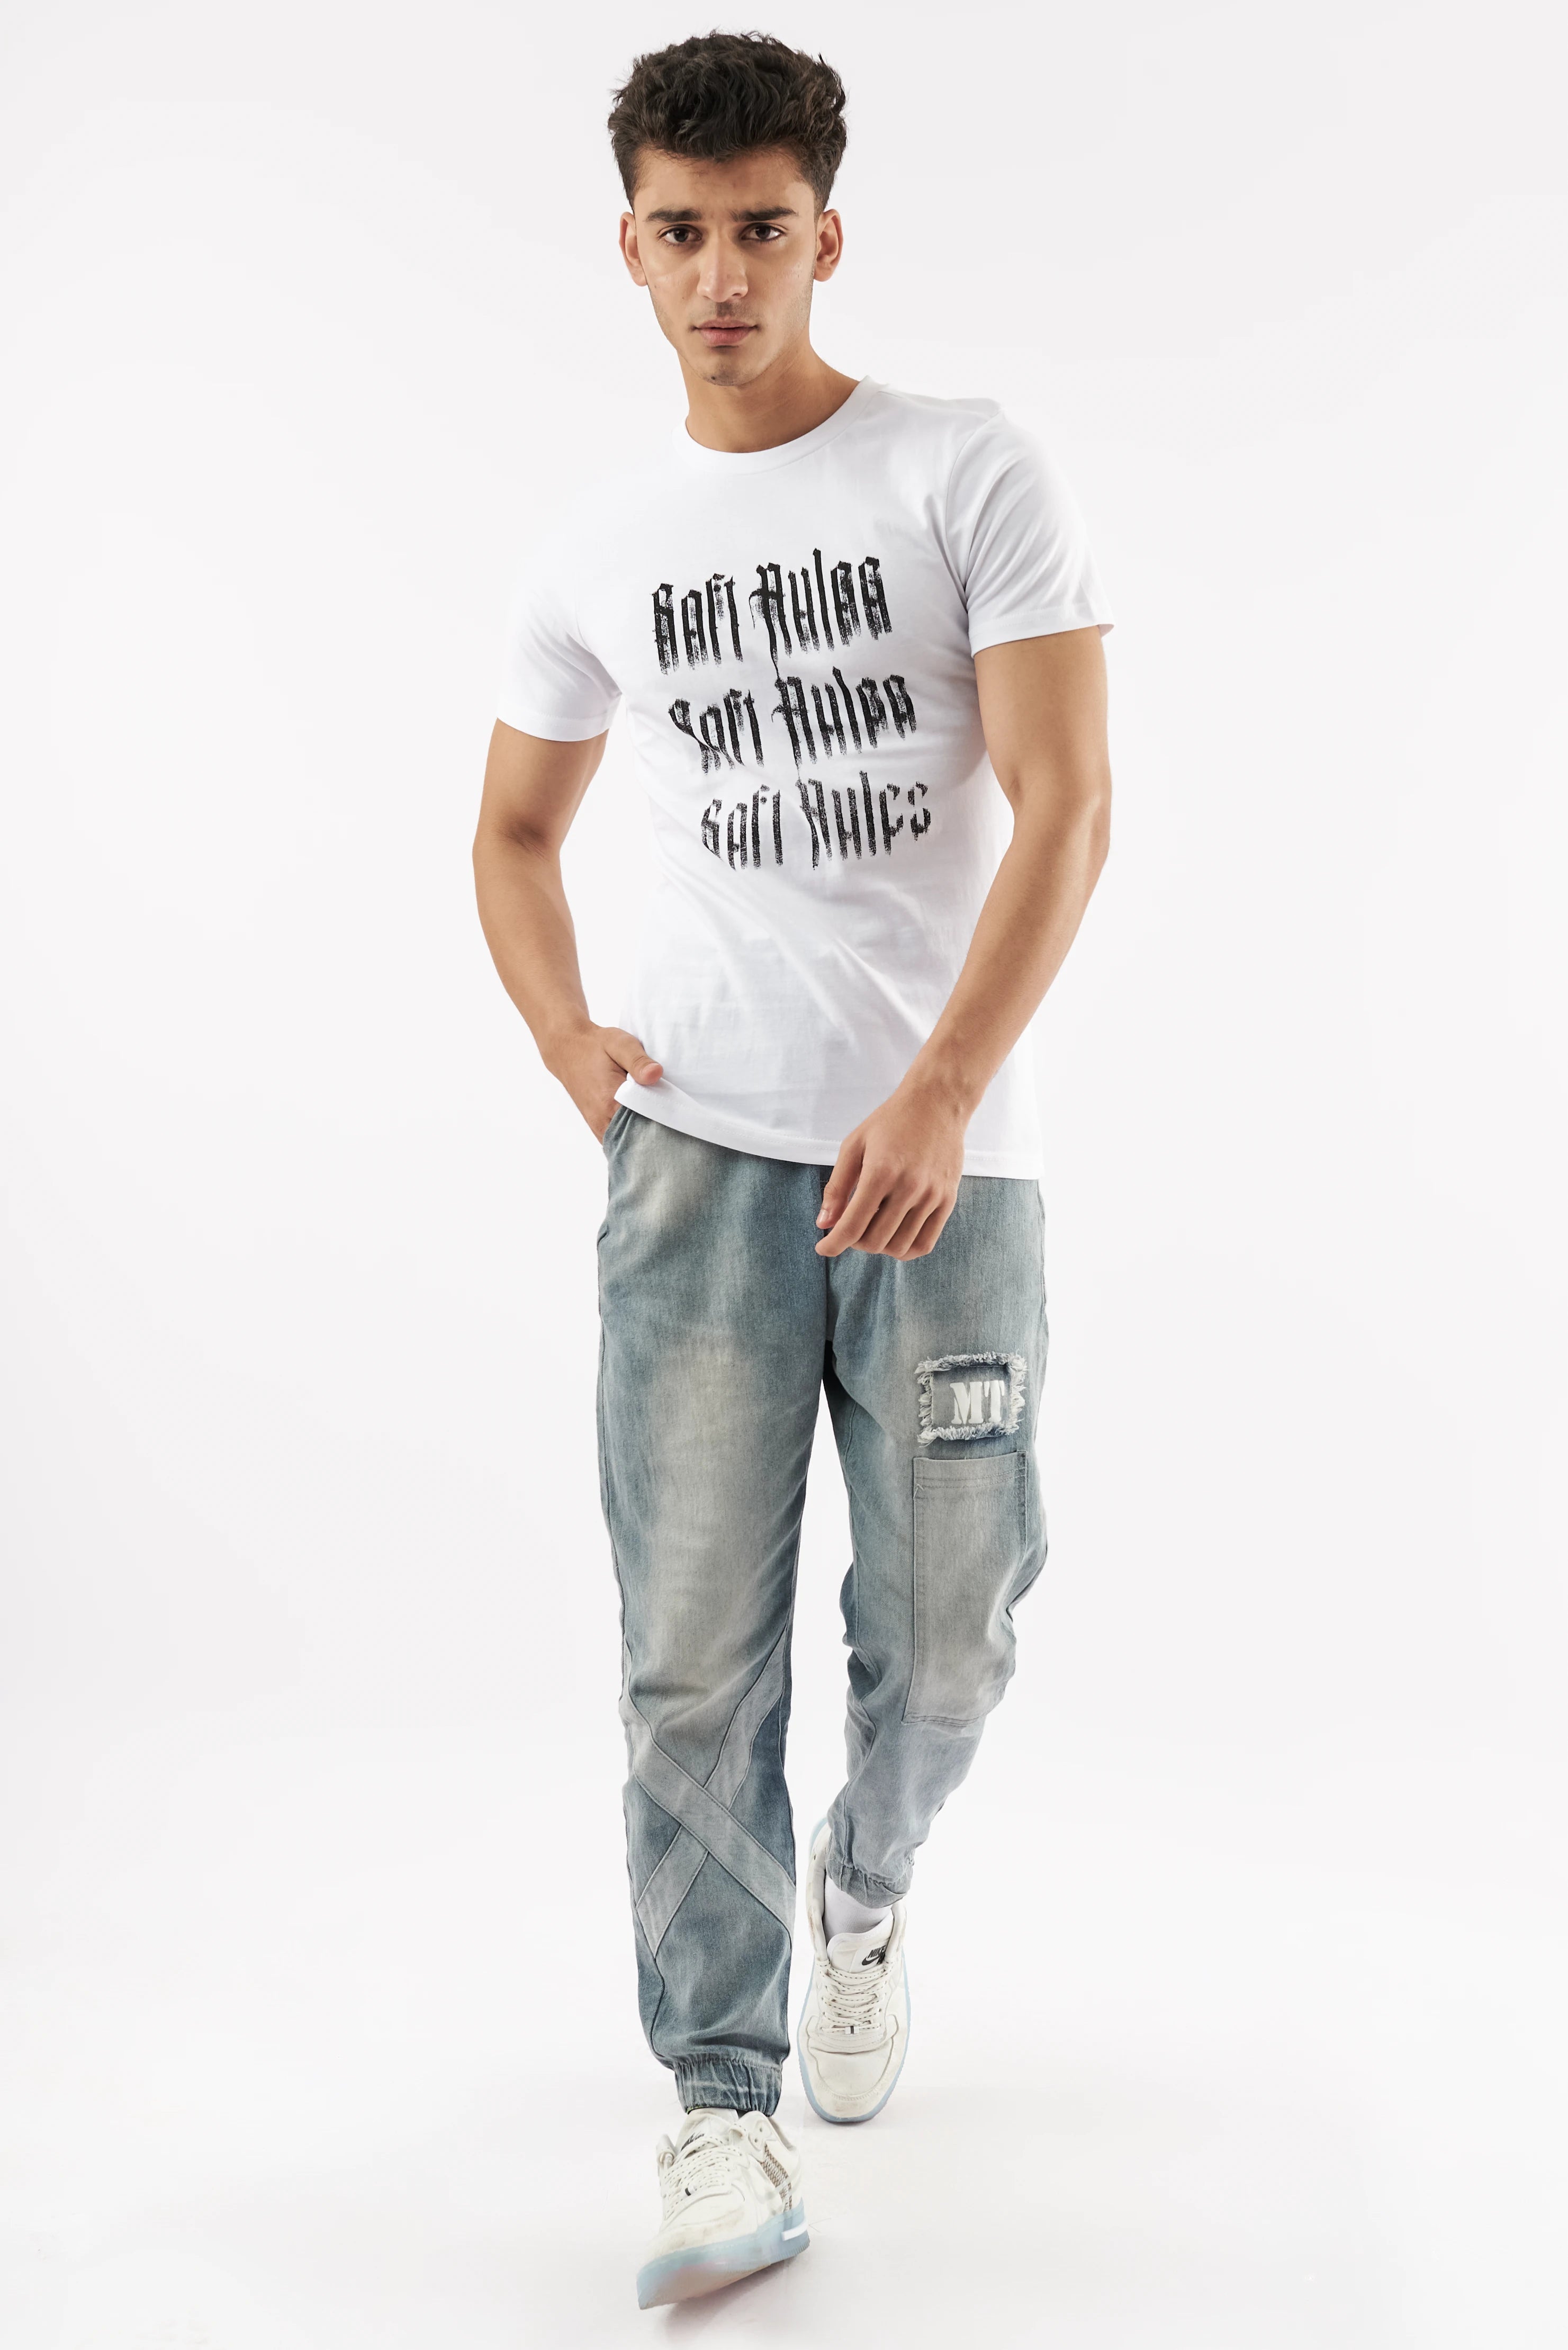 Men's Rules Graphics T-Shirt White